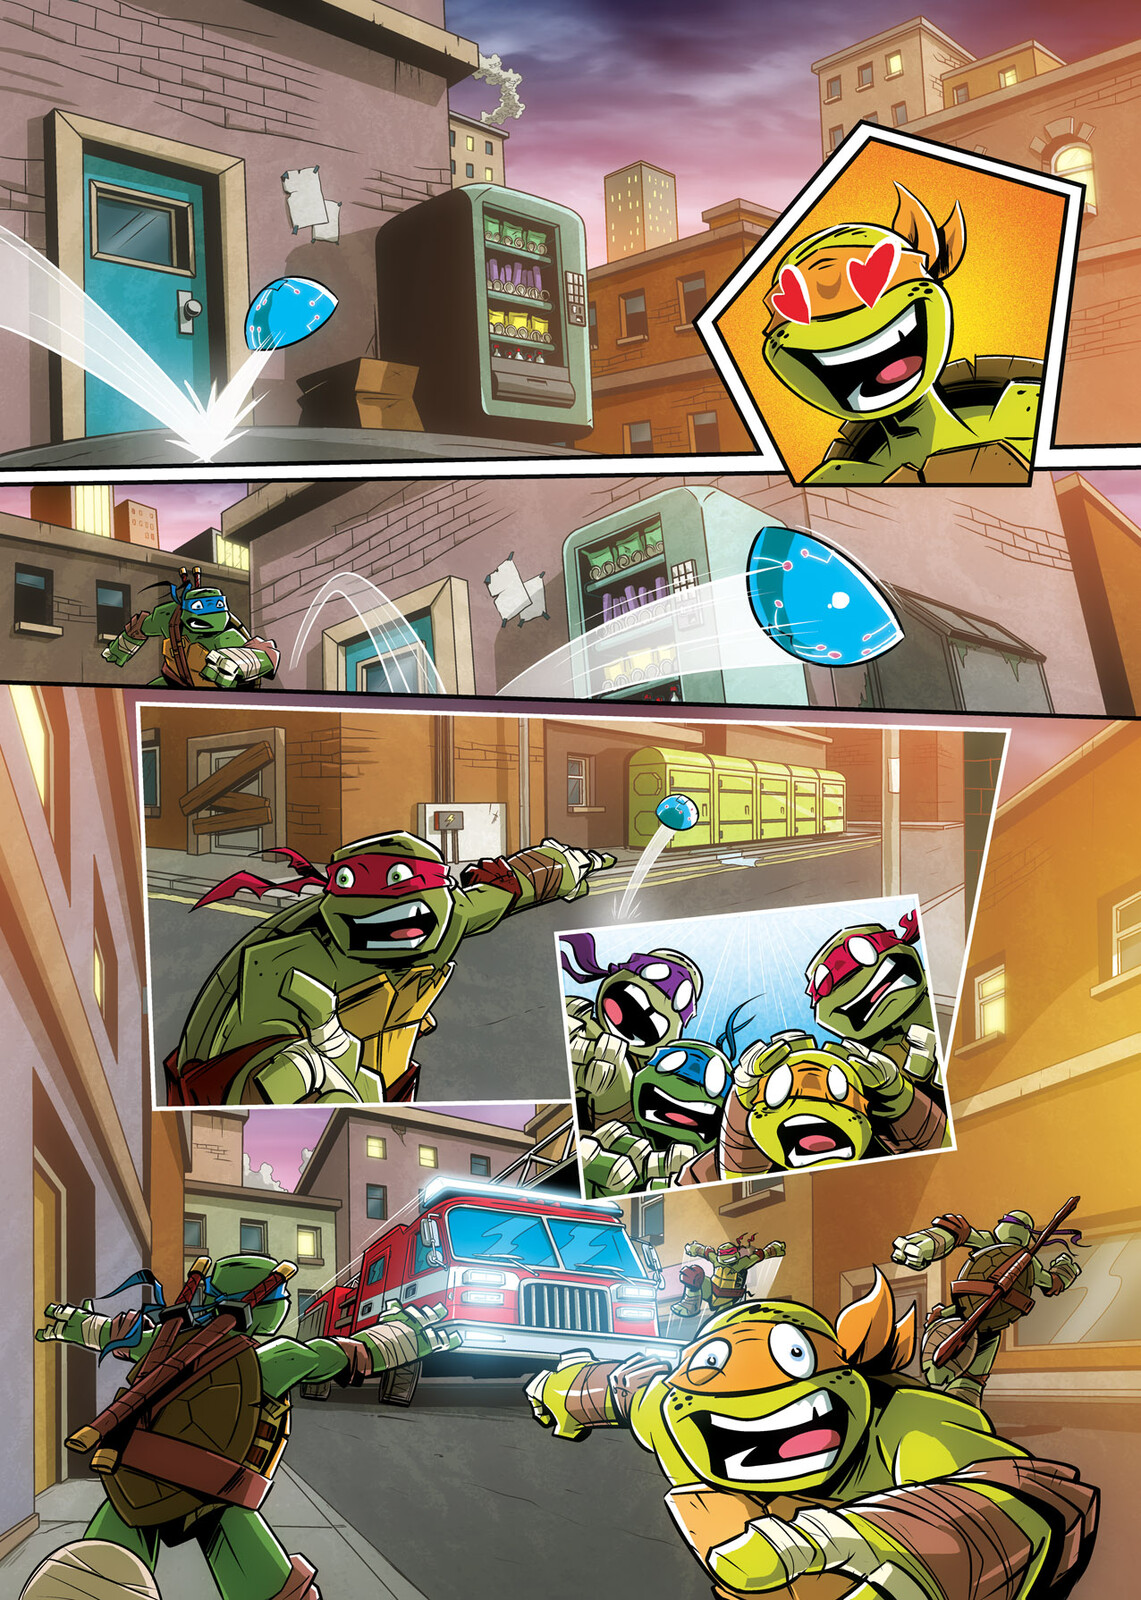 Page excerpt from Nickelodeon/Panini's Teenage Mutant Ninja Turtles comic 'Robo Rumble'